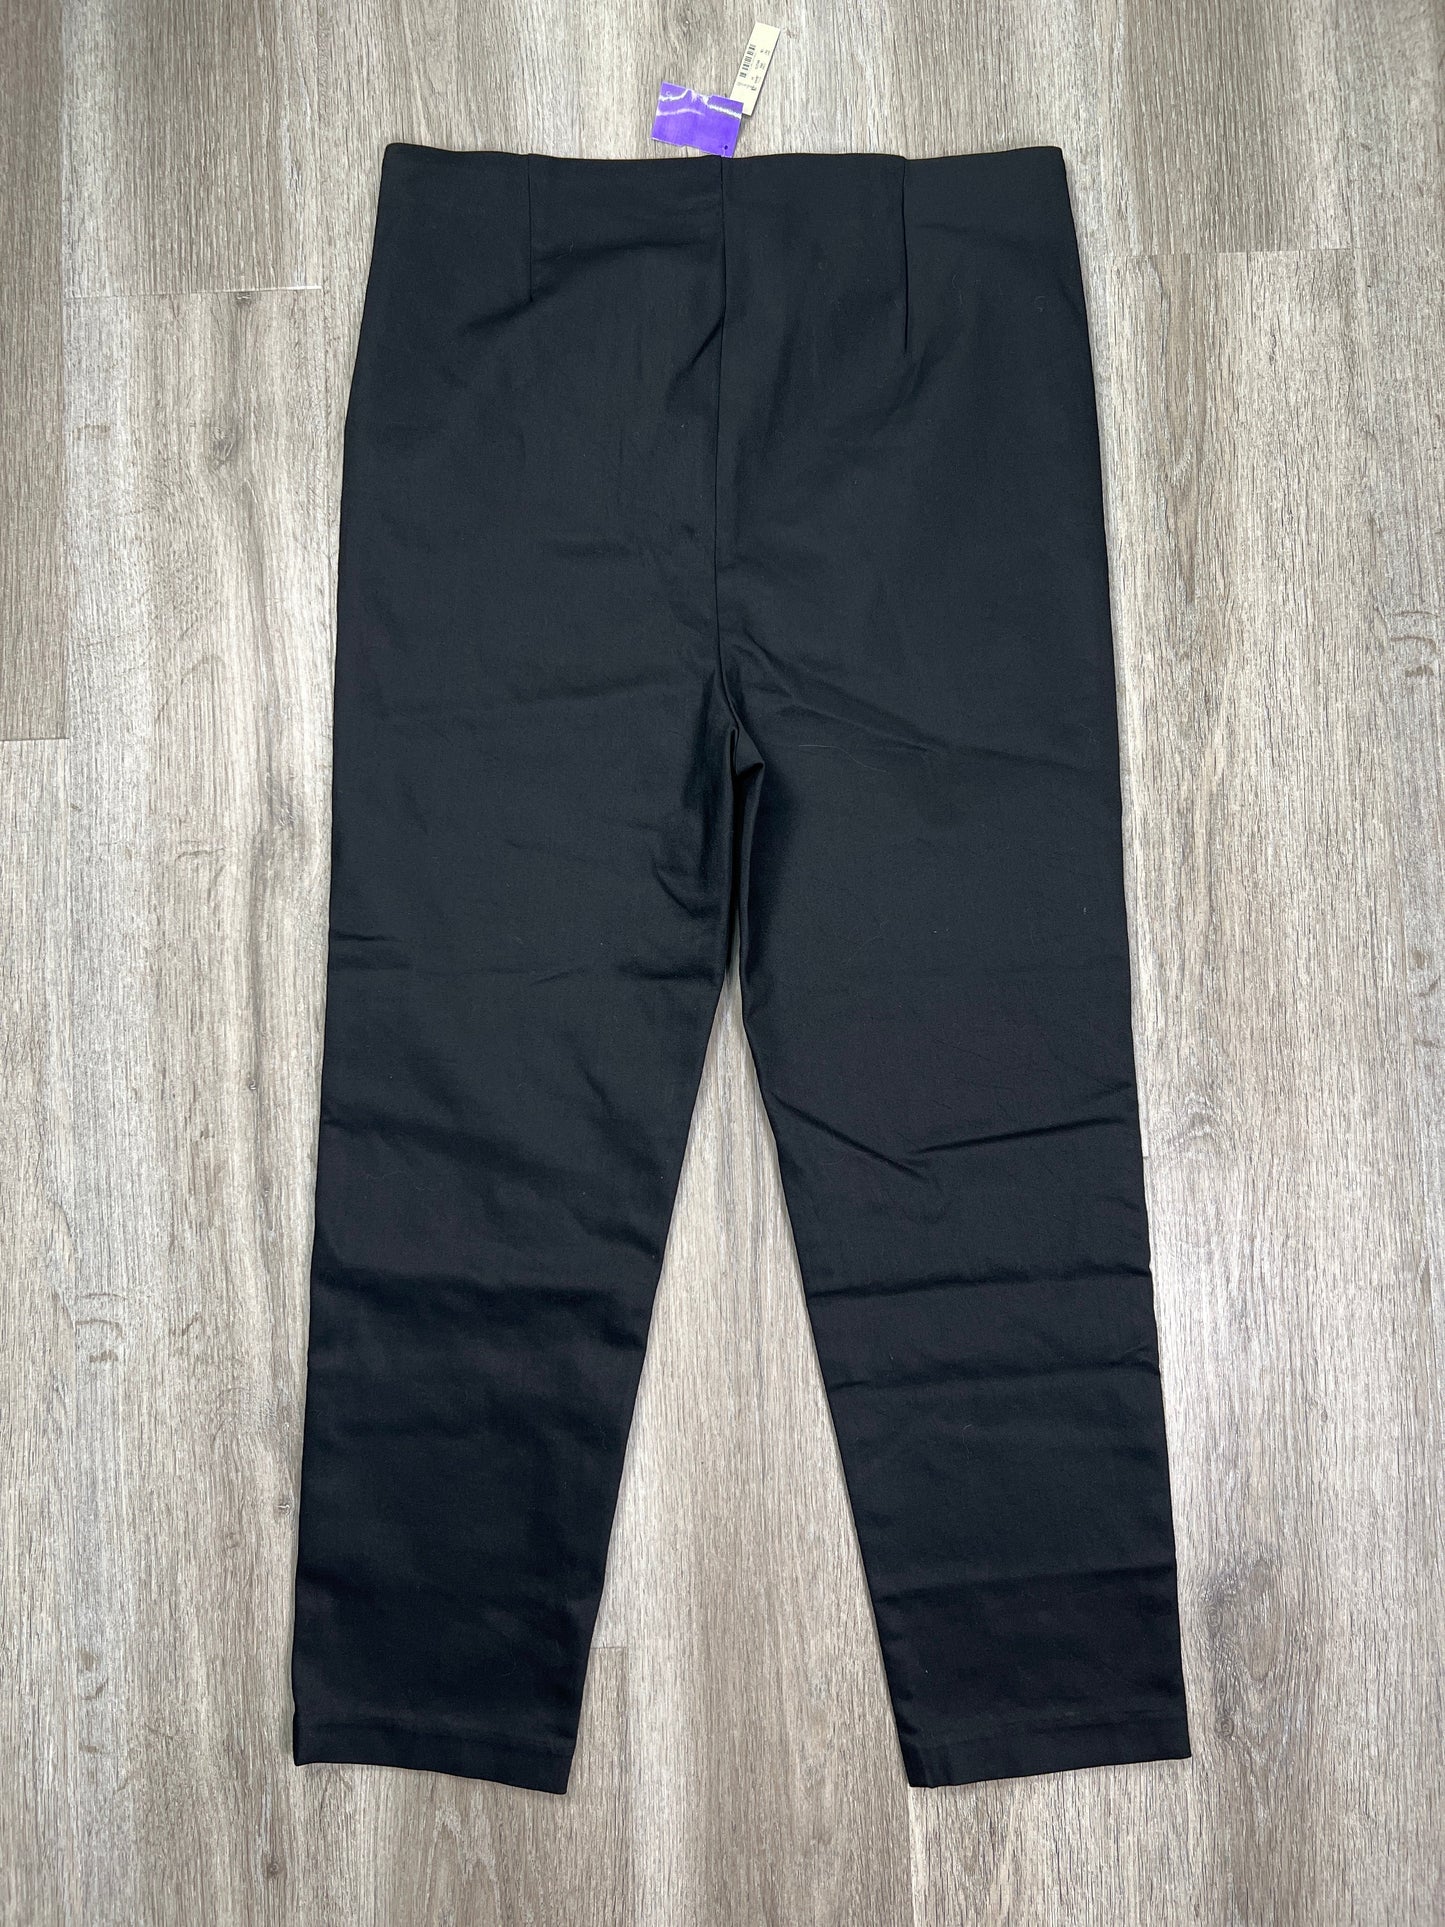 Black Pants Dress Madewell, Size L